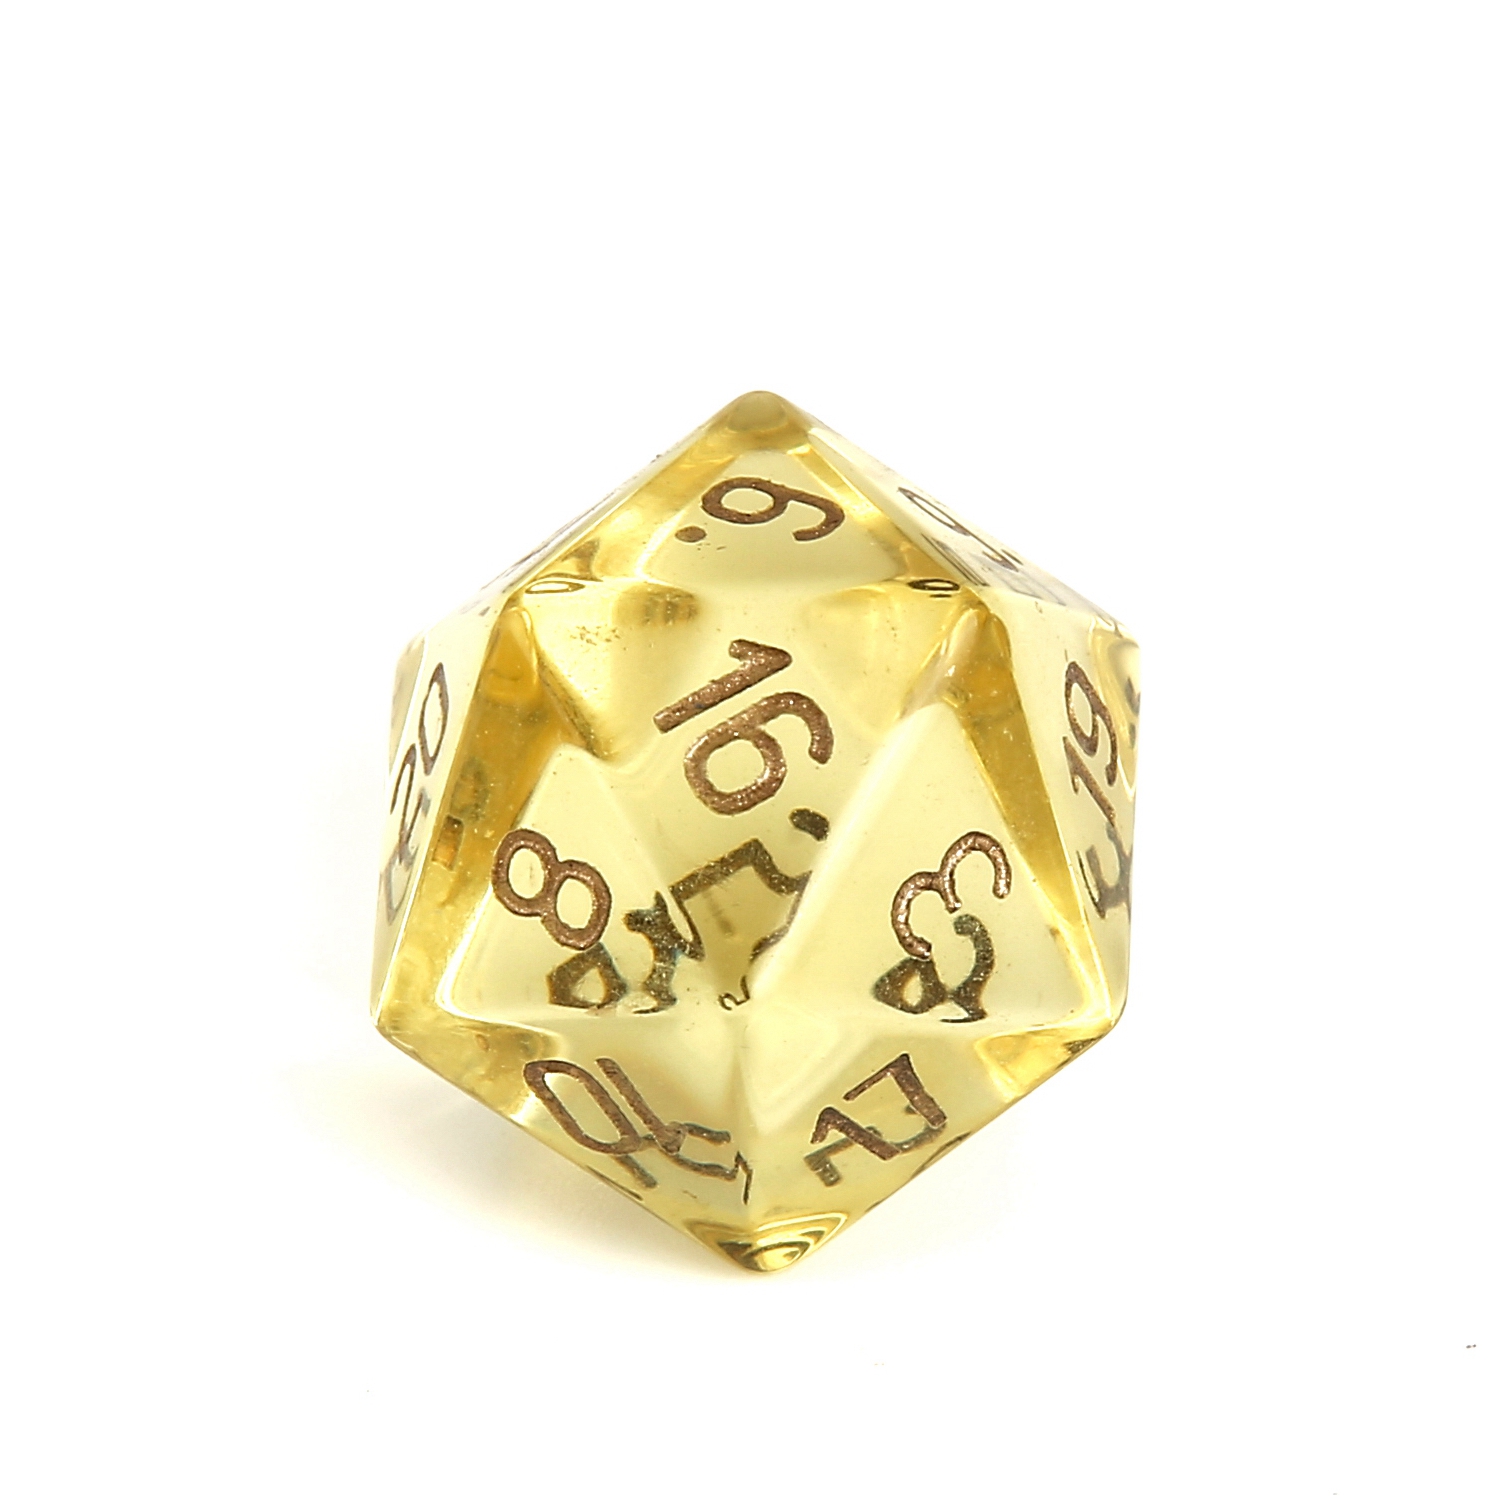 3:D20 icosahedron